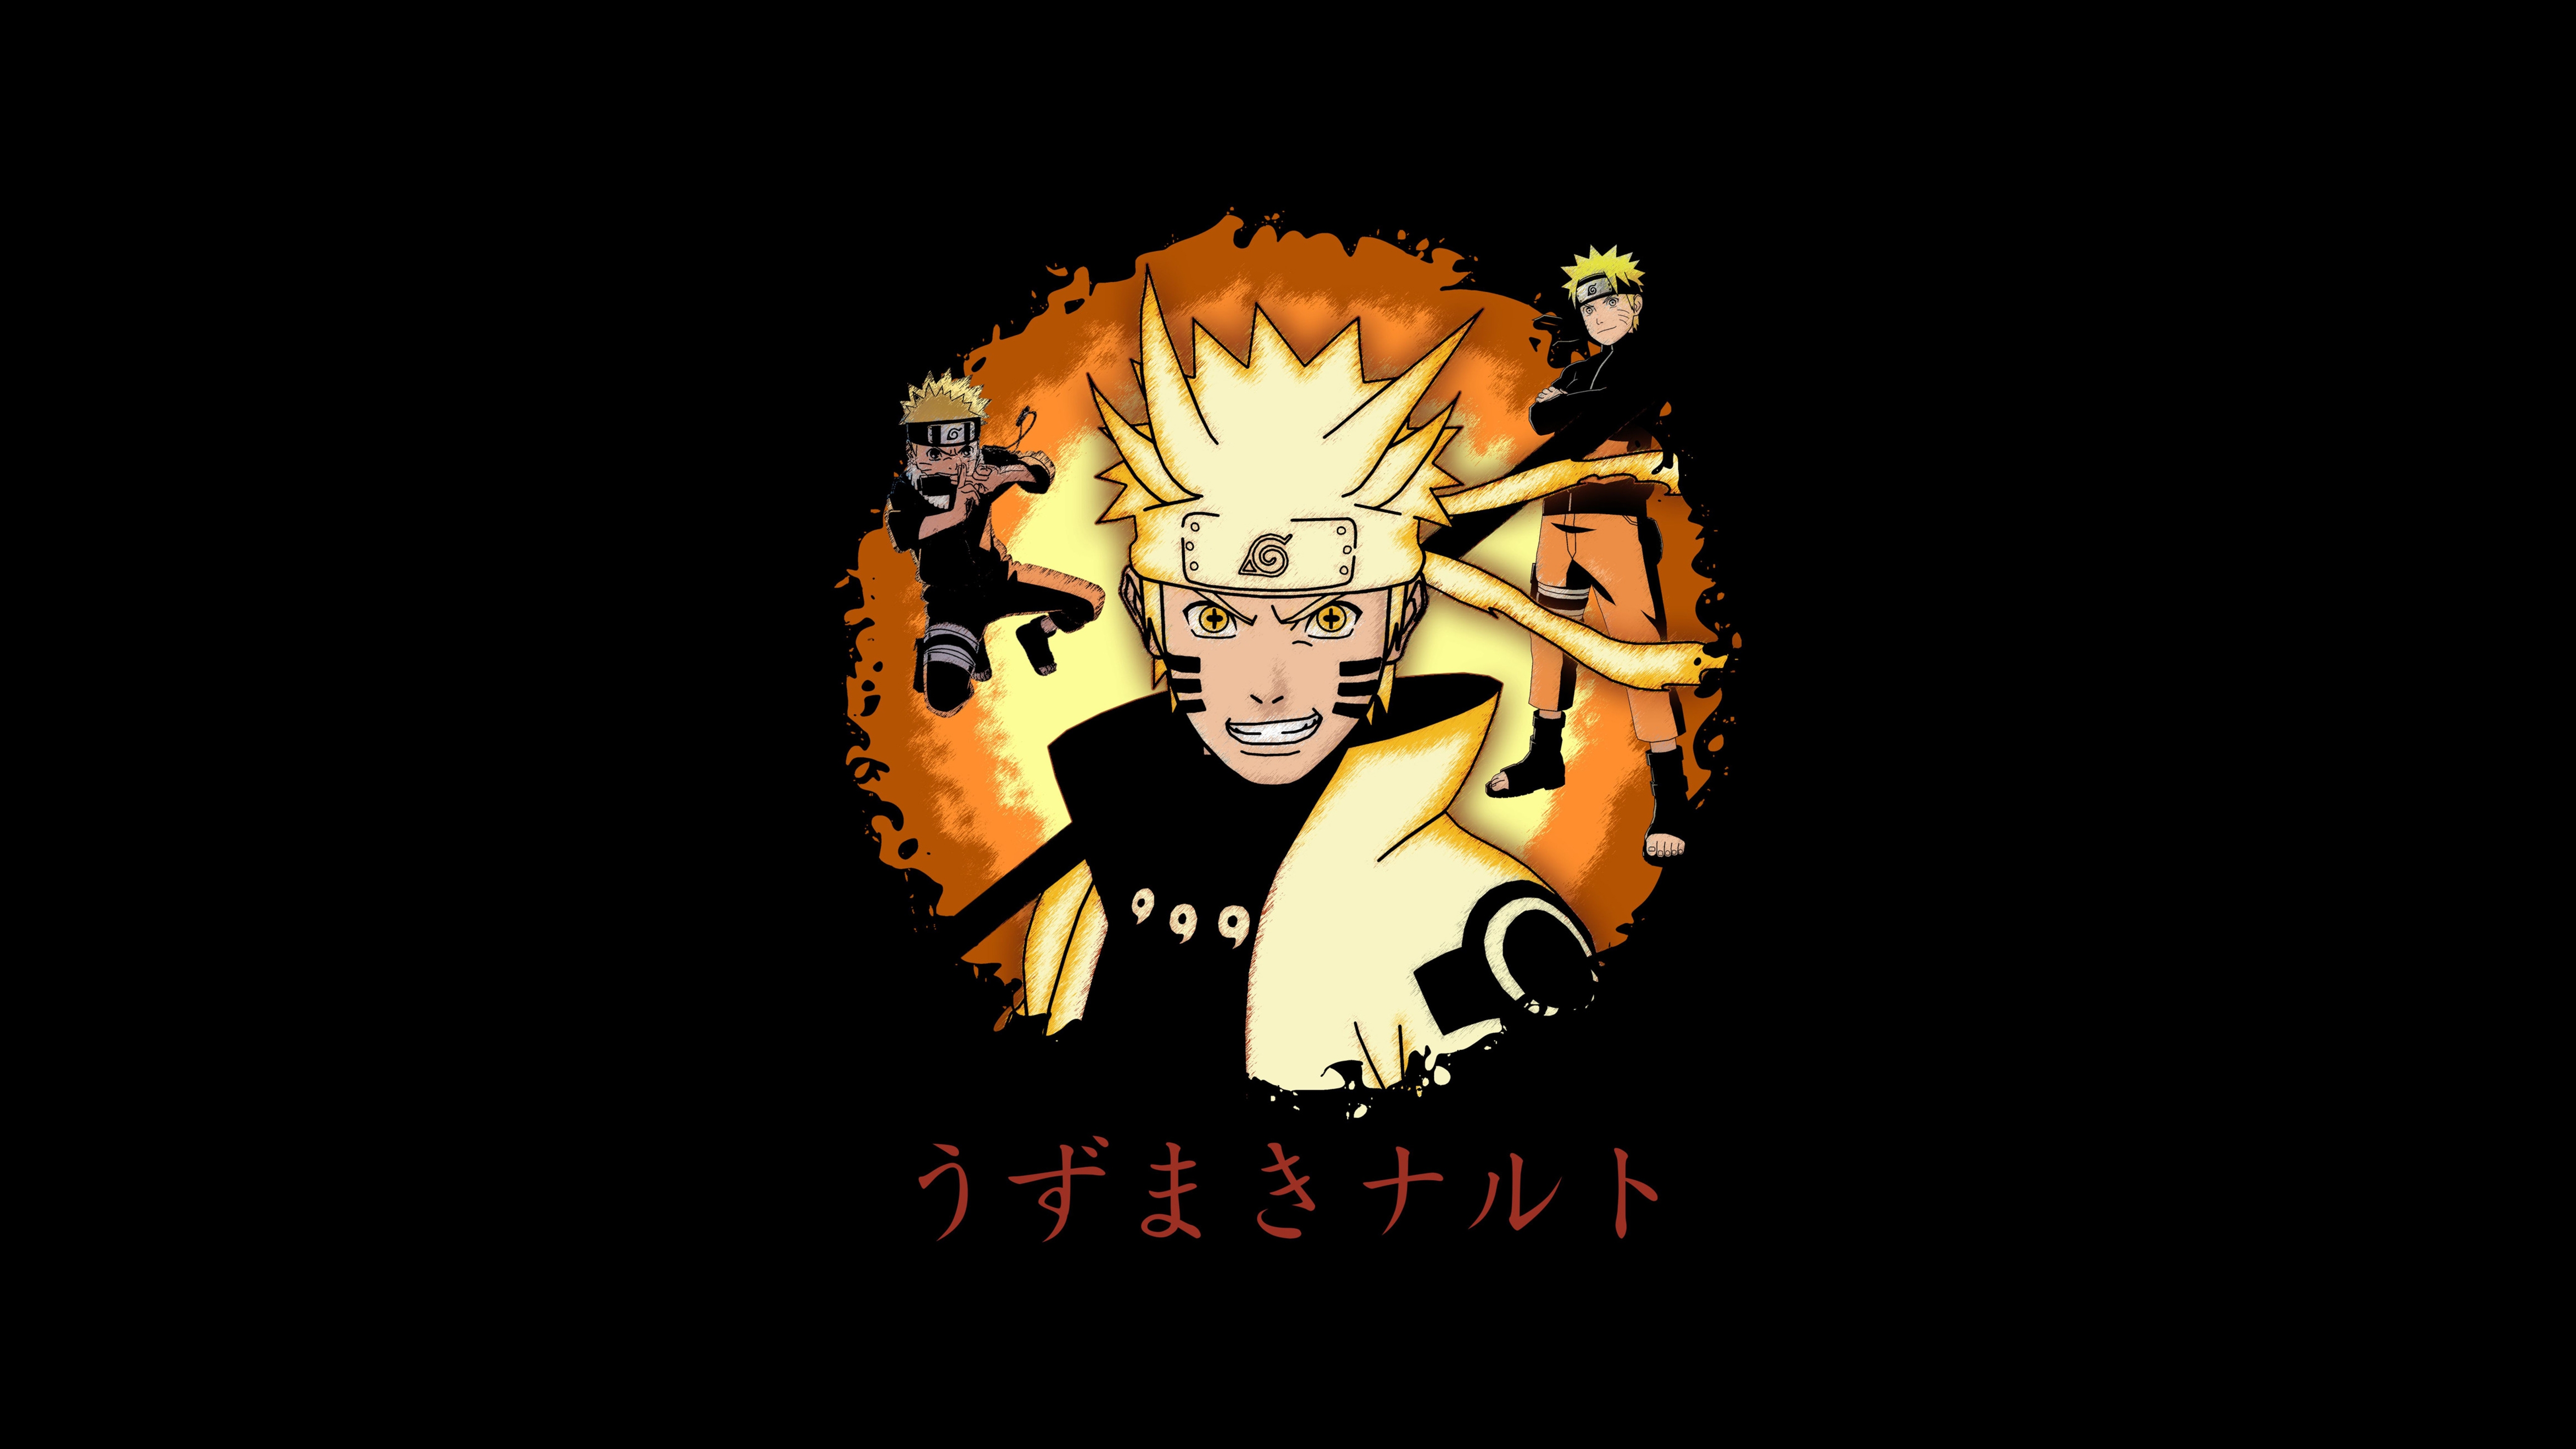 HD wallpaper, Naruto Uzumaki, Dark Theme, 5K, Black Background